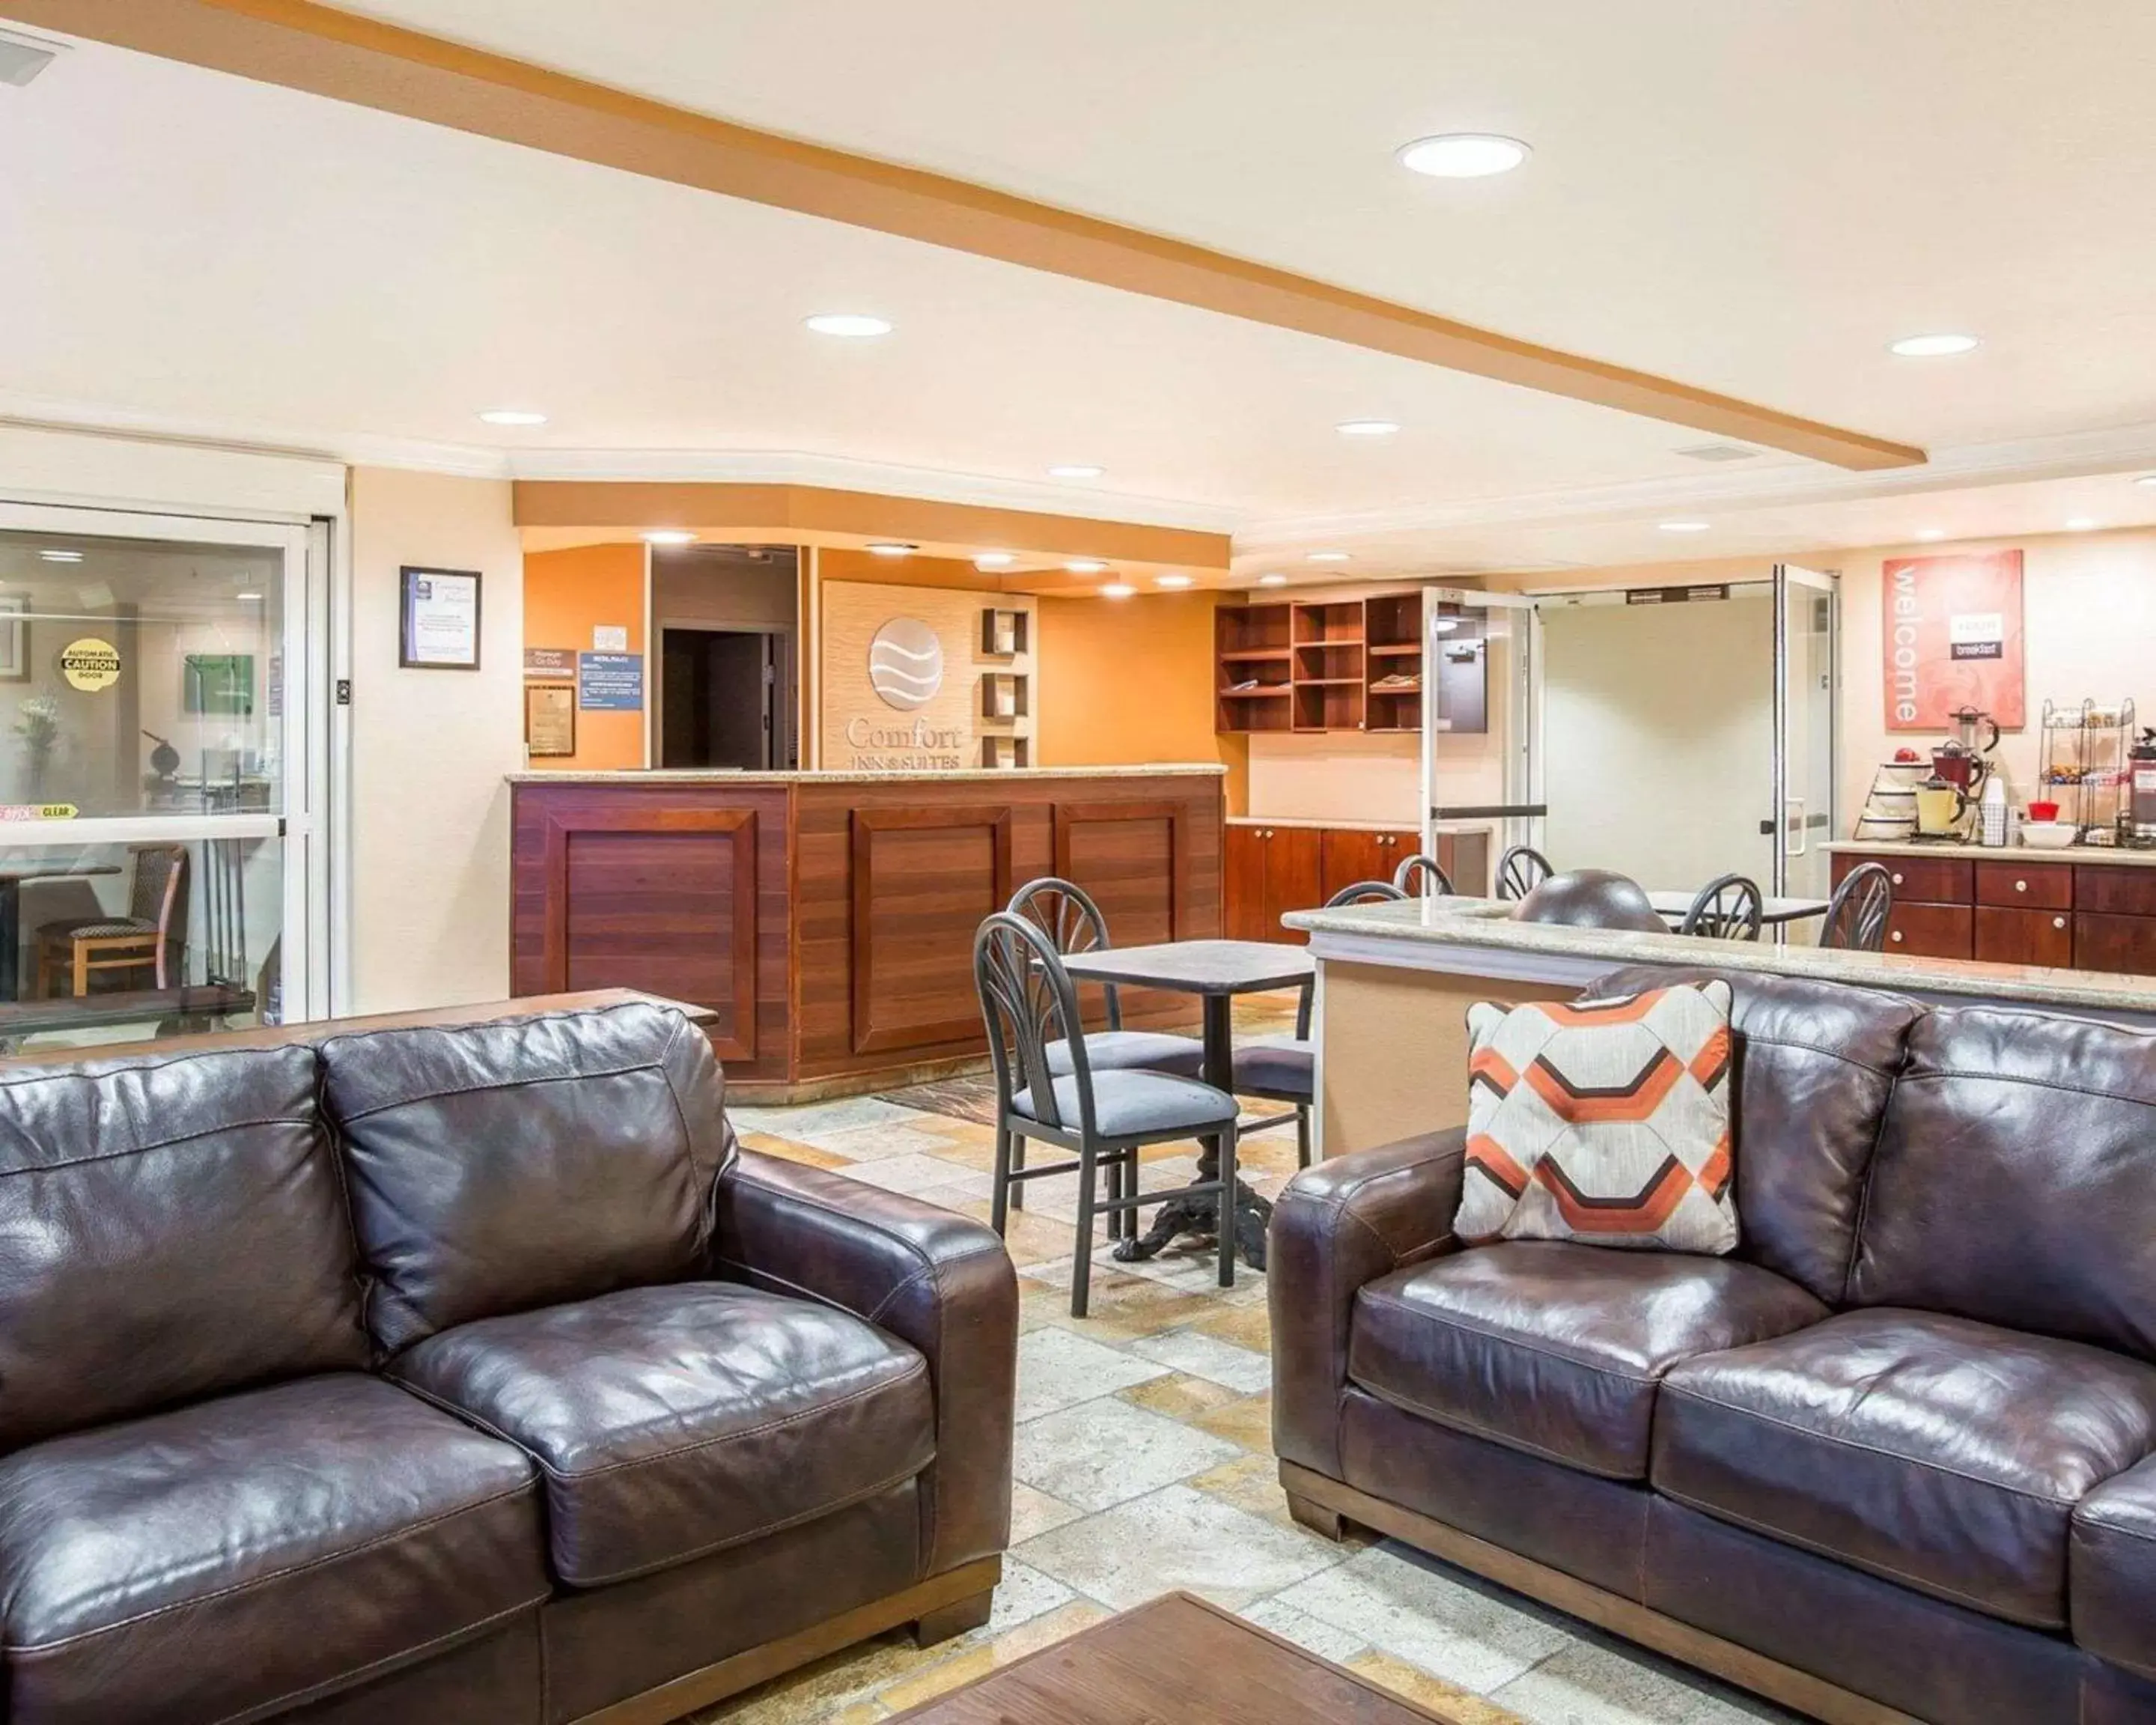 Lobby or reception, Lobby/Reception in Comfort Inn & Suites Salinas